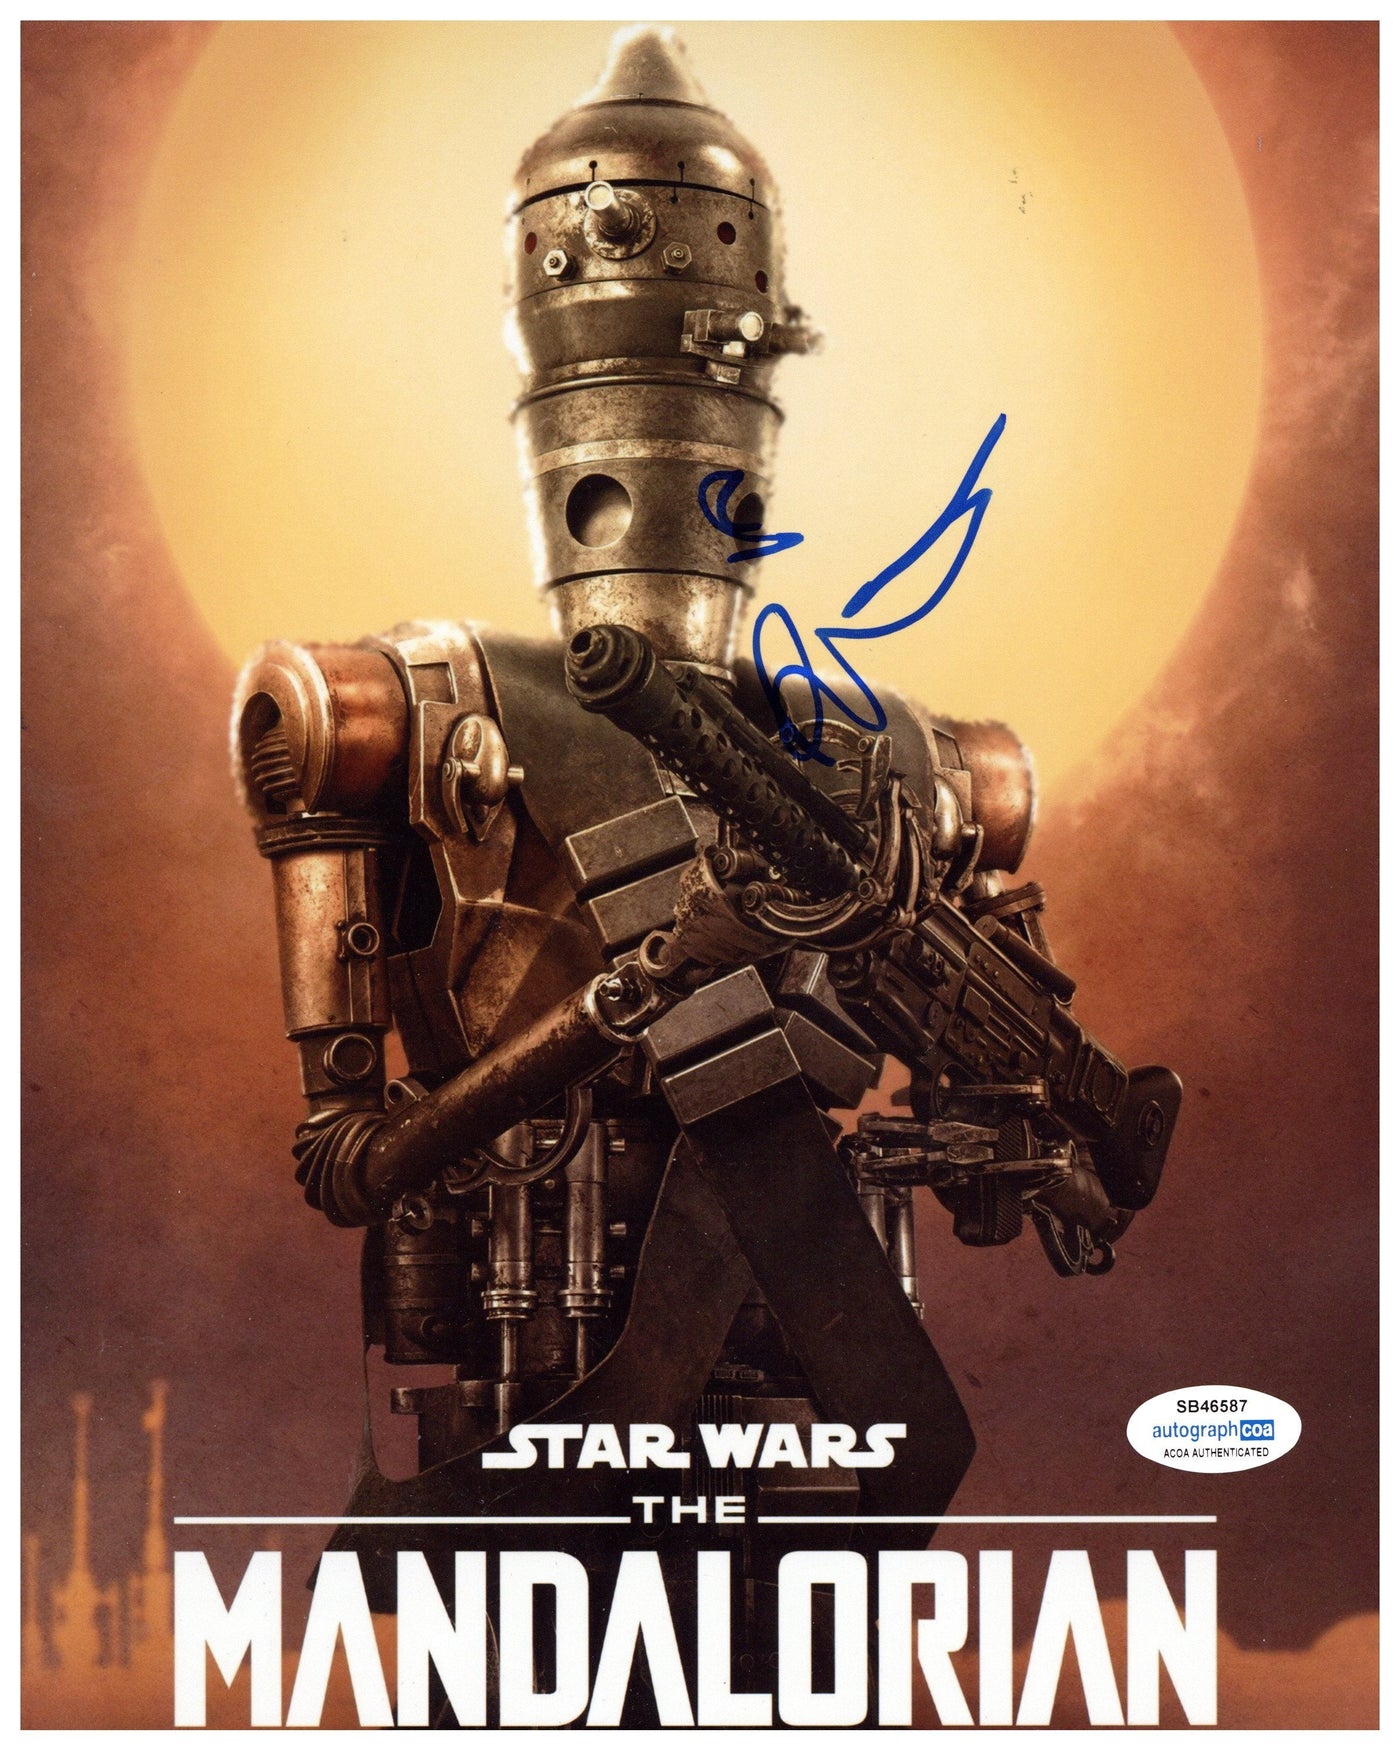 Taika Waititi Signed 8x10 Photo Star Wars The Mandalorian IG-11 Autographed ACOA #2